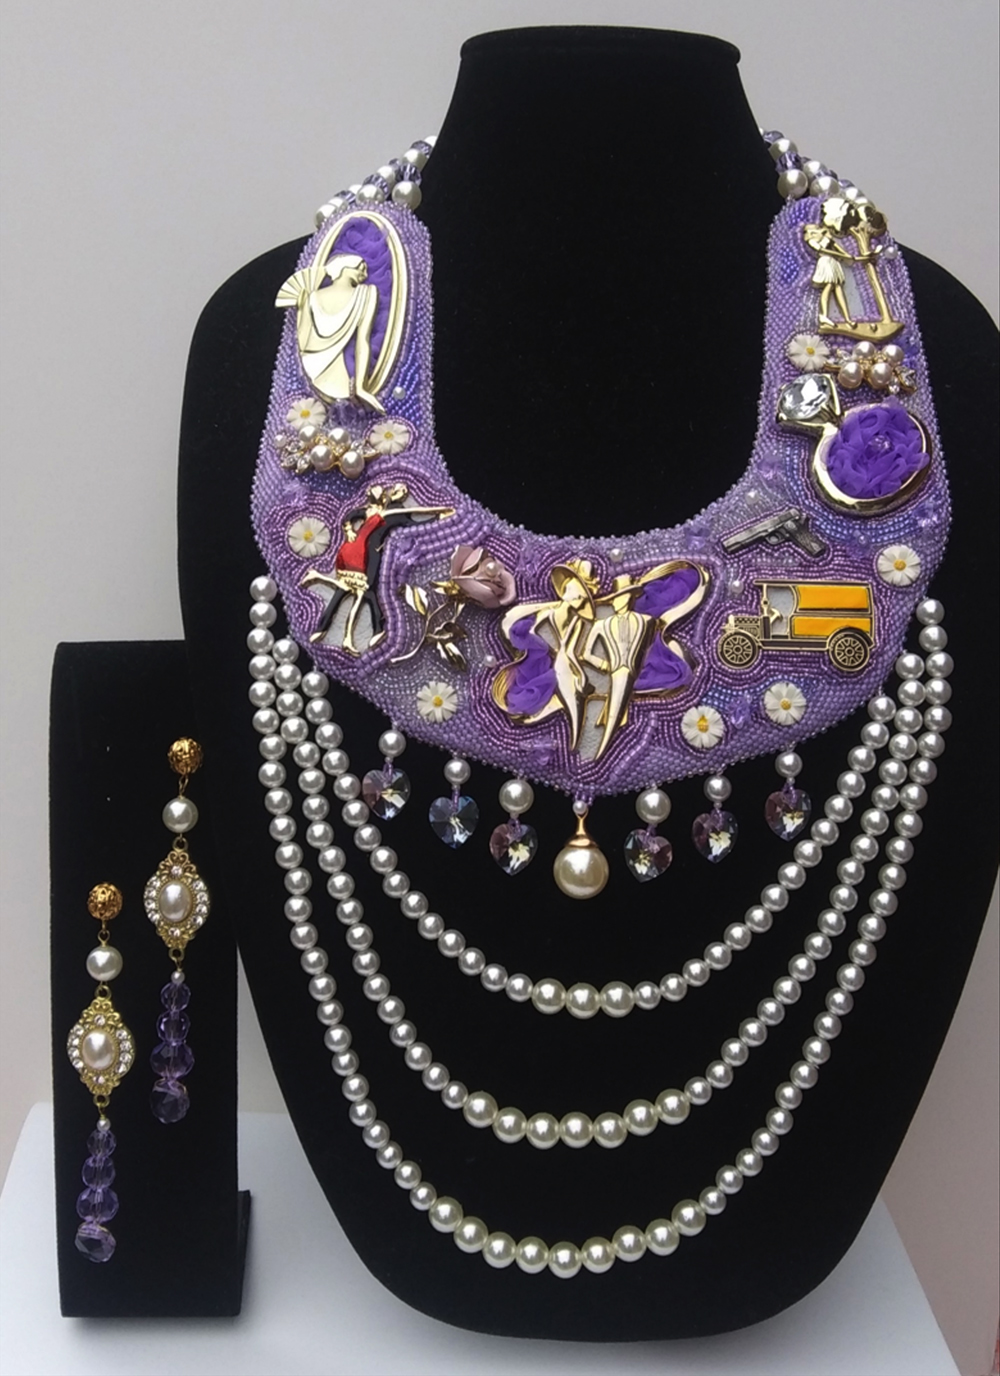 "The Great Gatsby" inspired jewelry by Tatiana Van Iten